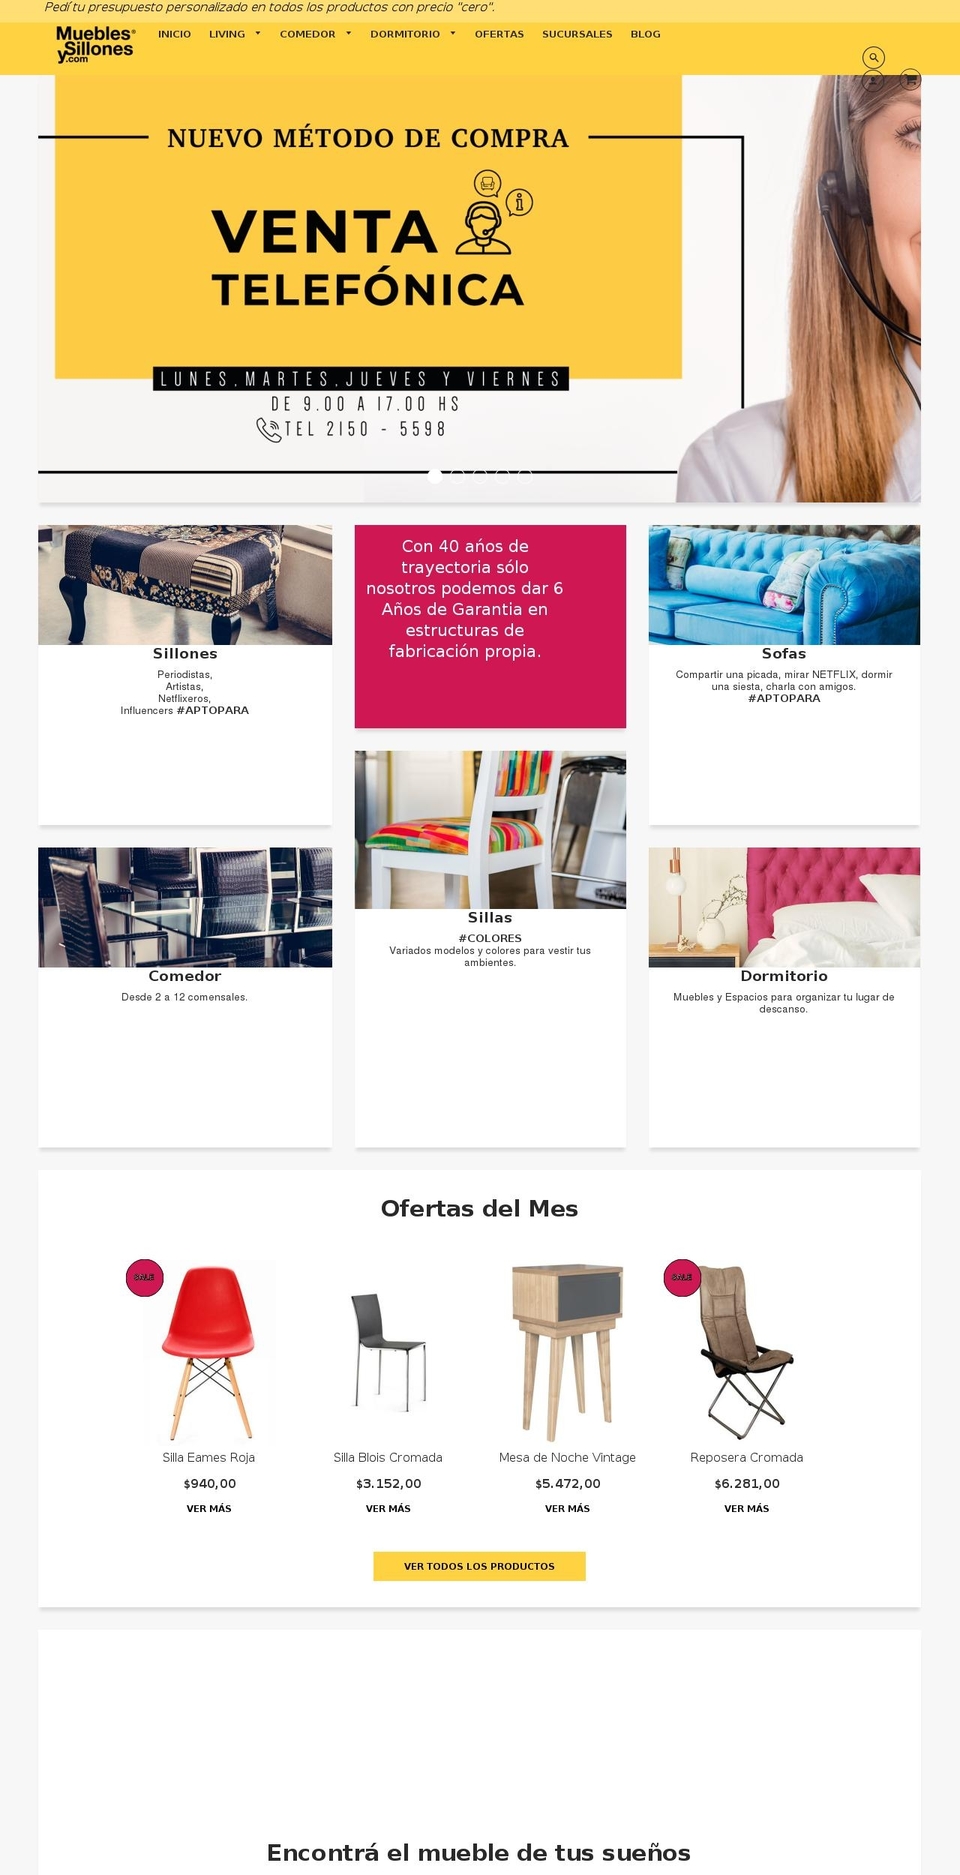 mueblesysillones.com.ar shopify website screenshot